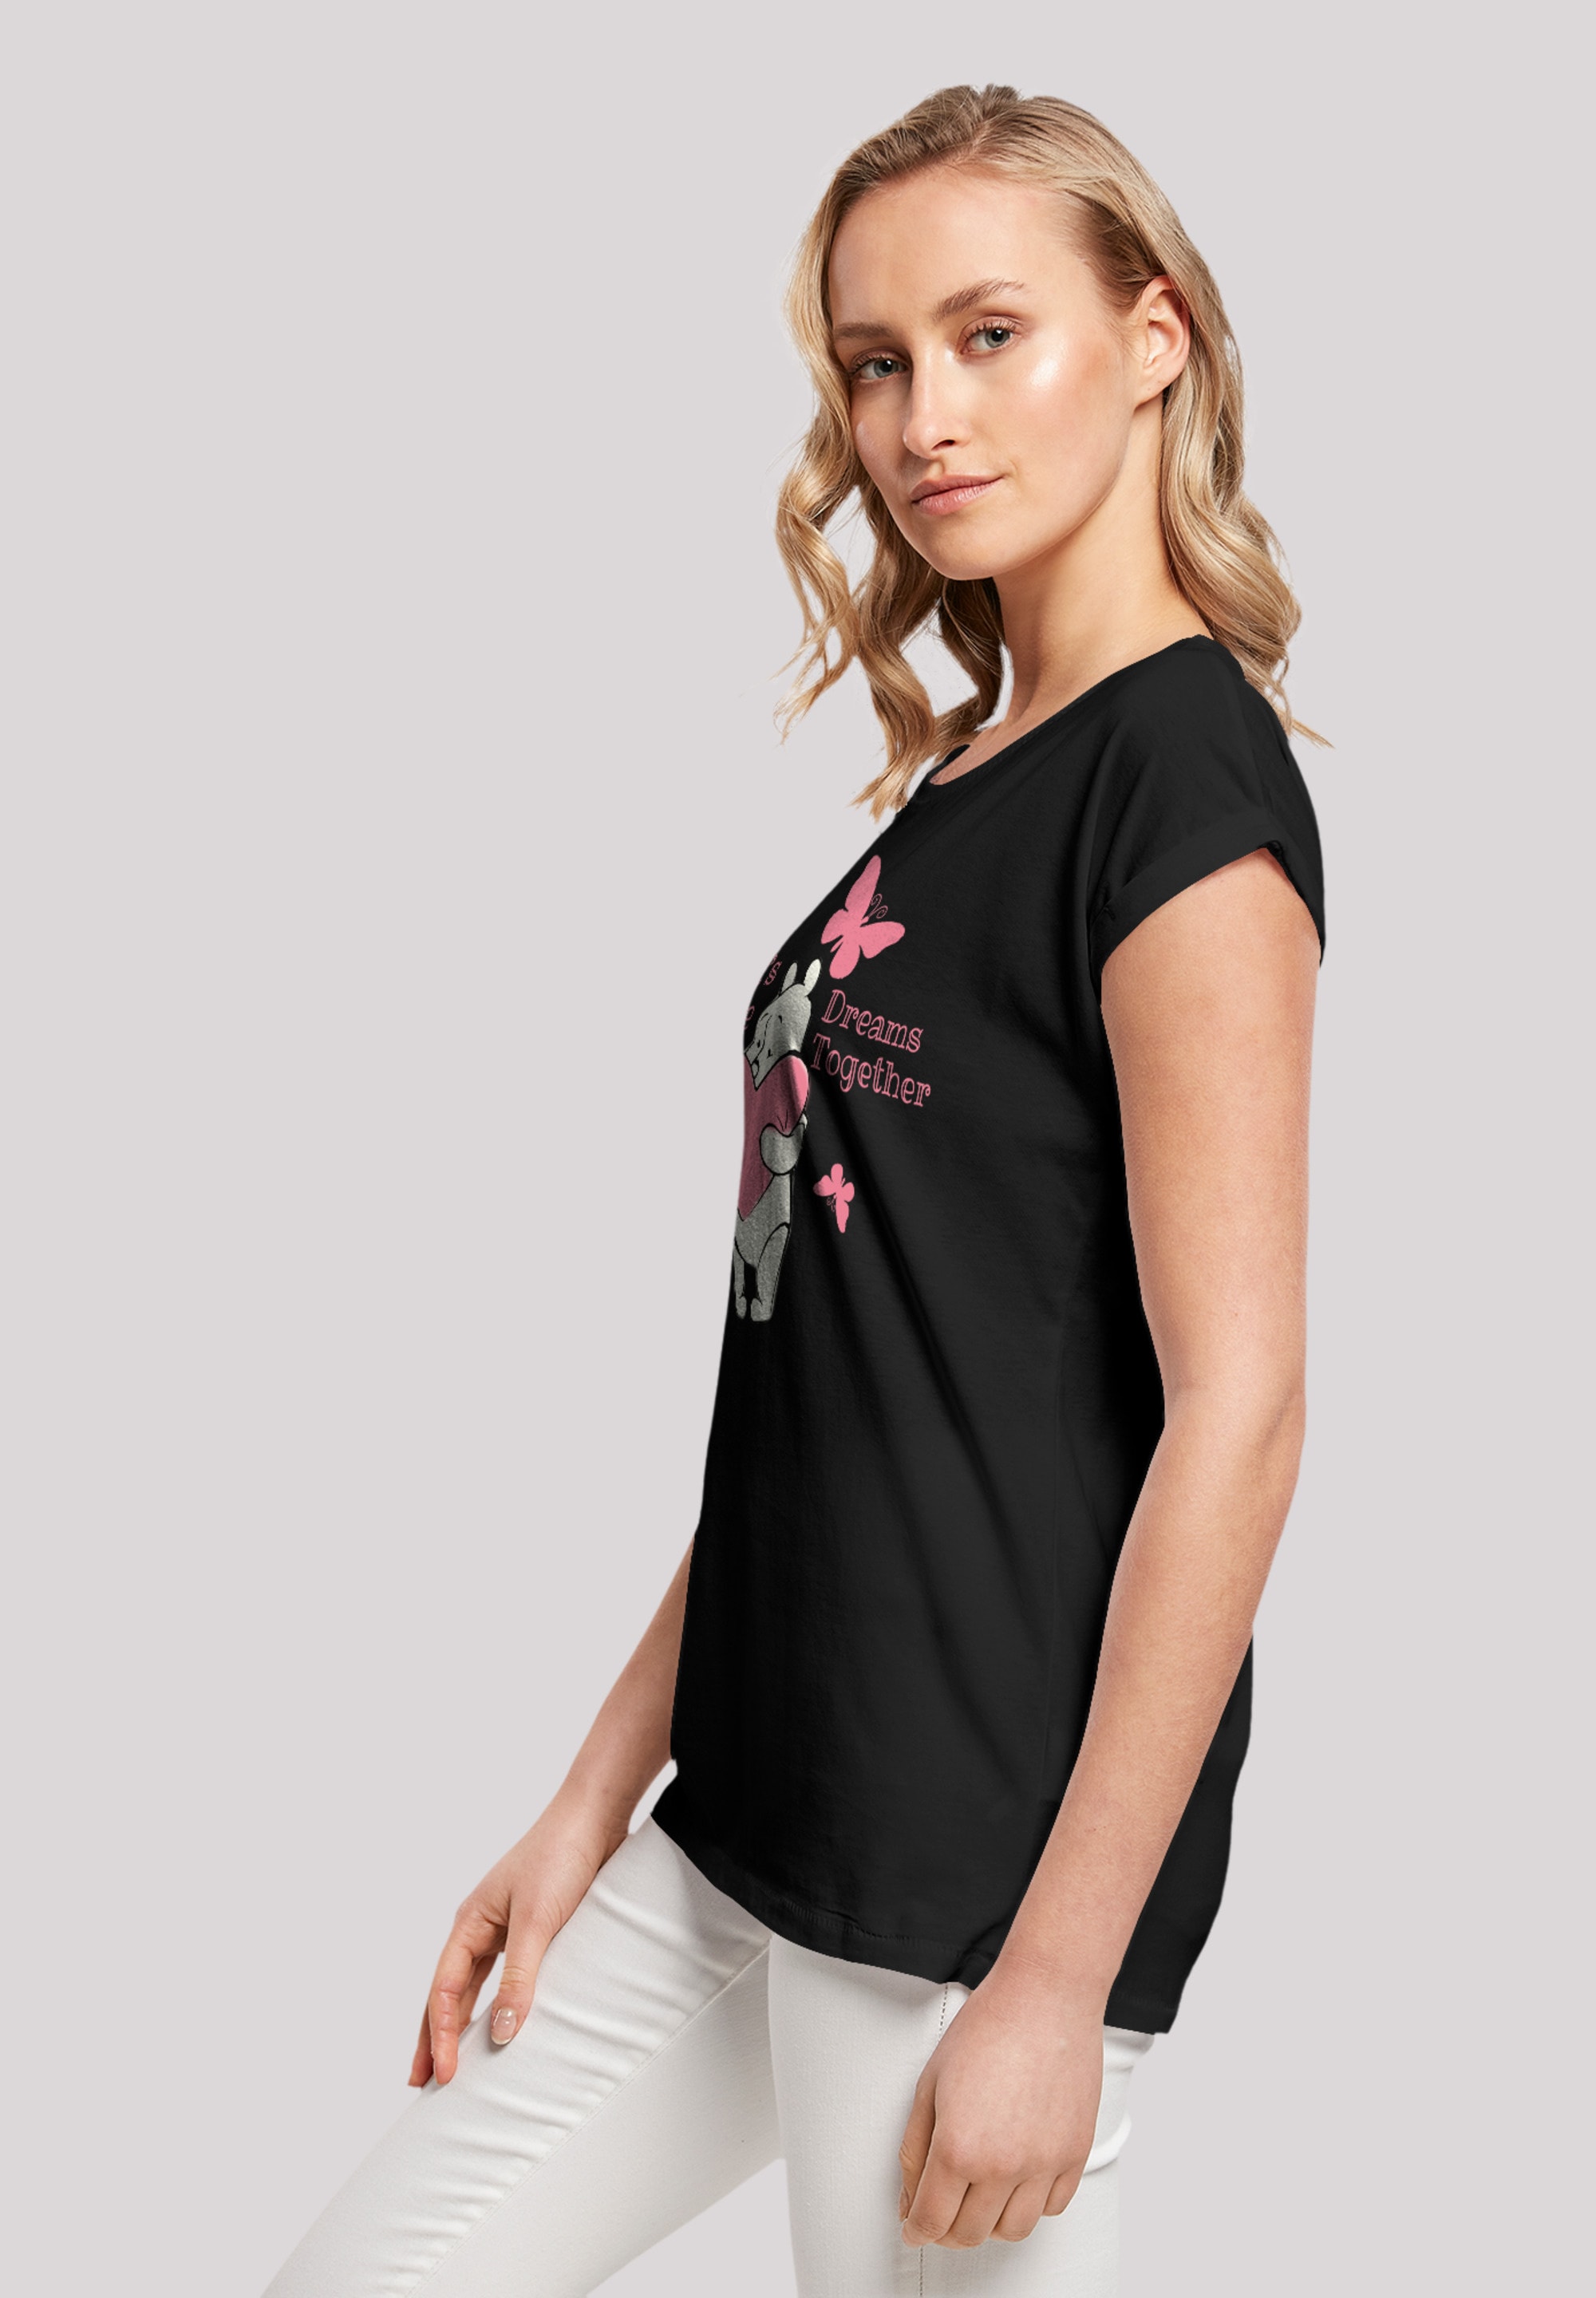 F4NT4STIC T-Shirt »Disney Winnie Puuh Let's Make Dreams«, Premium Qualität  bestellen